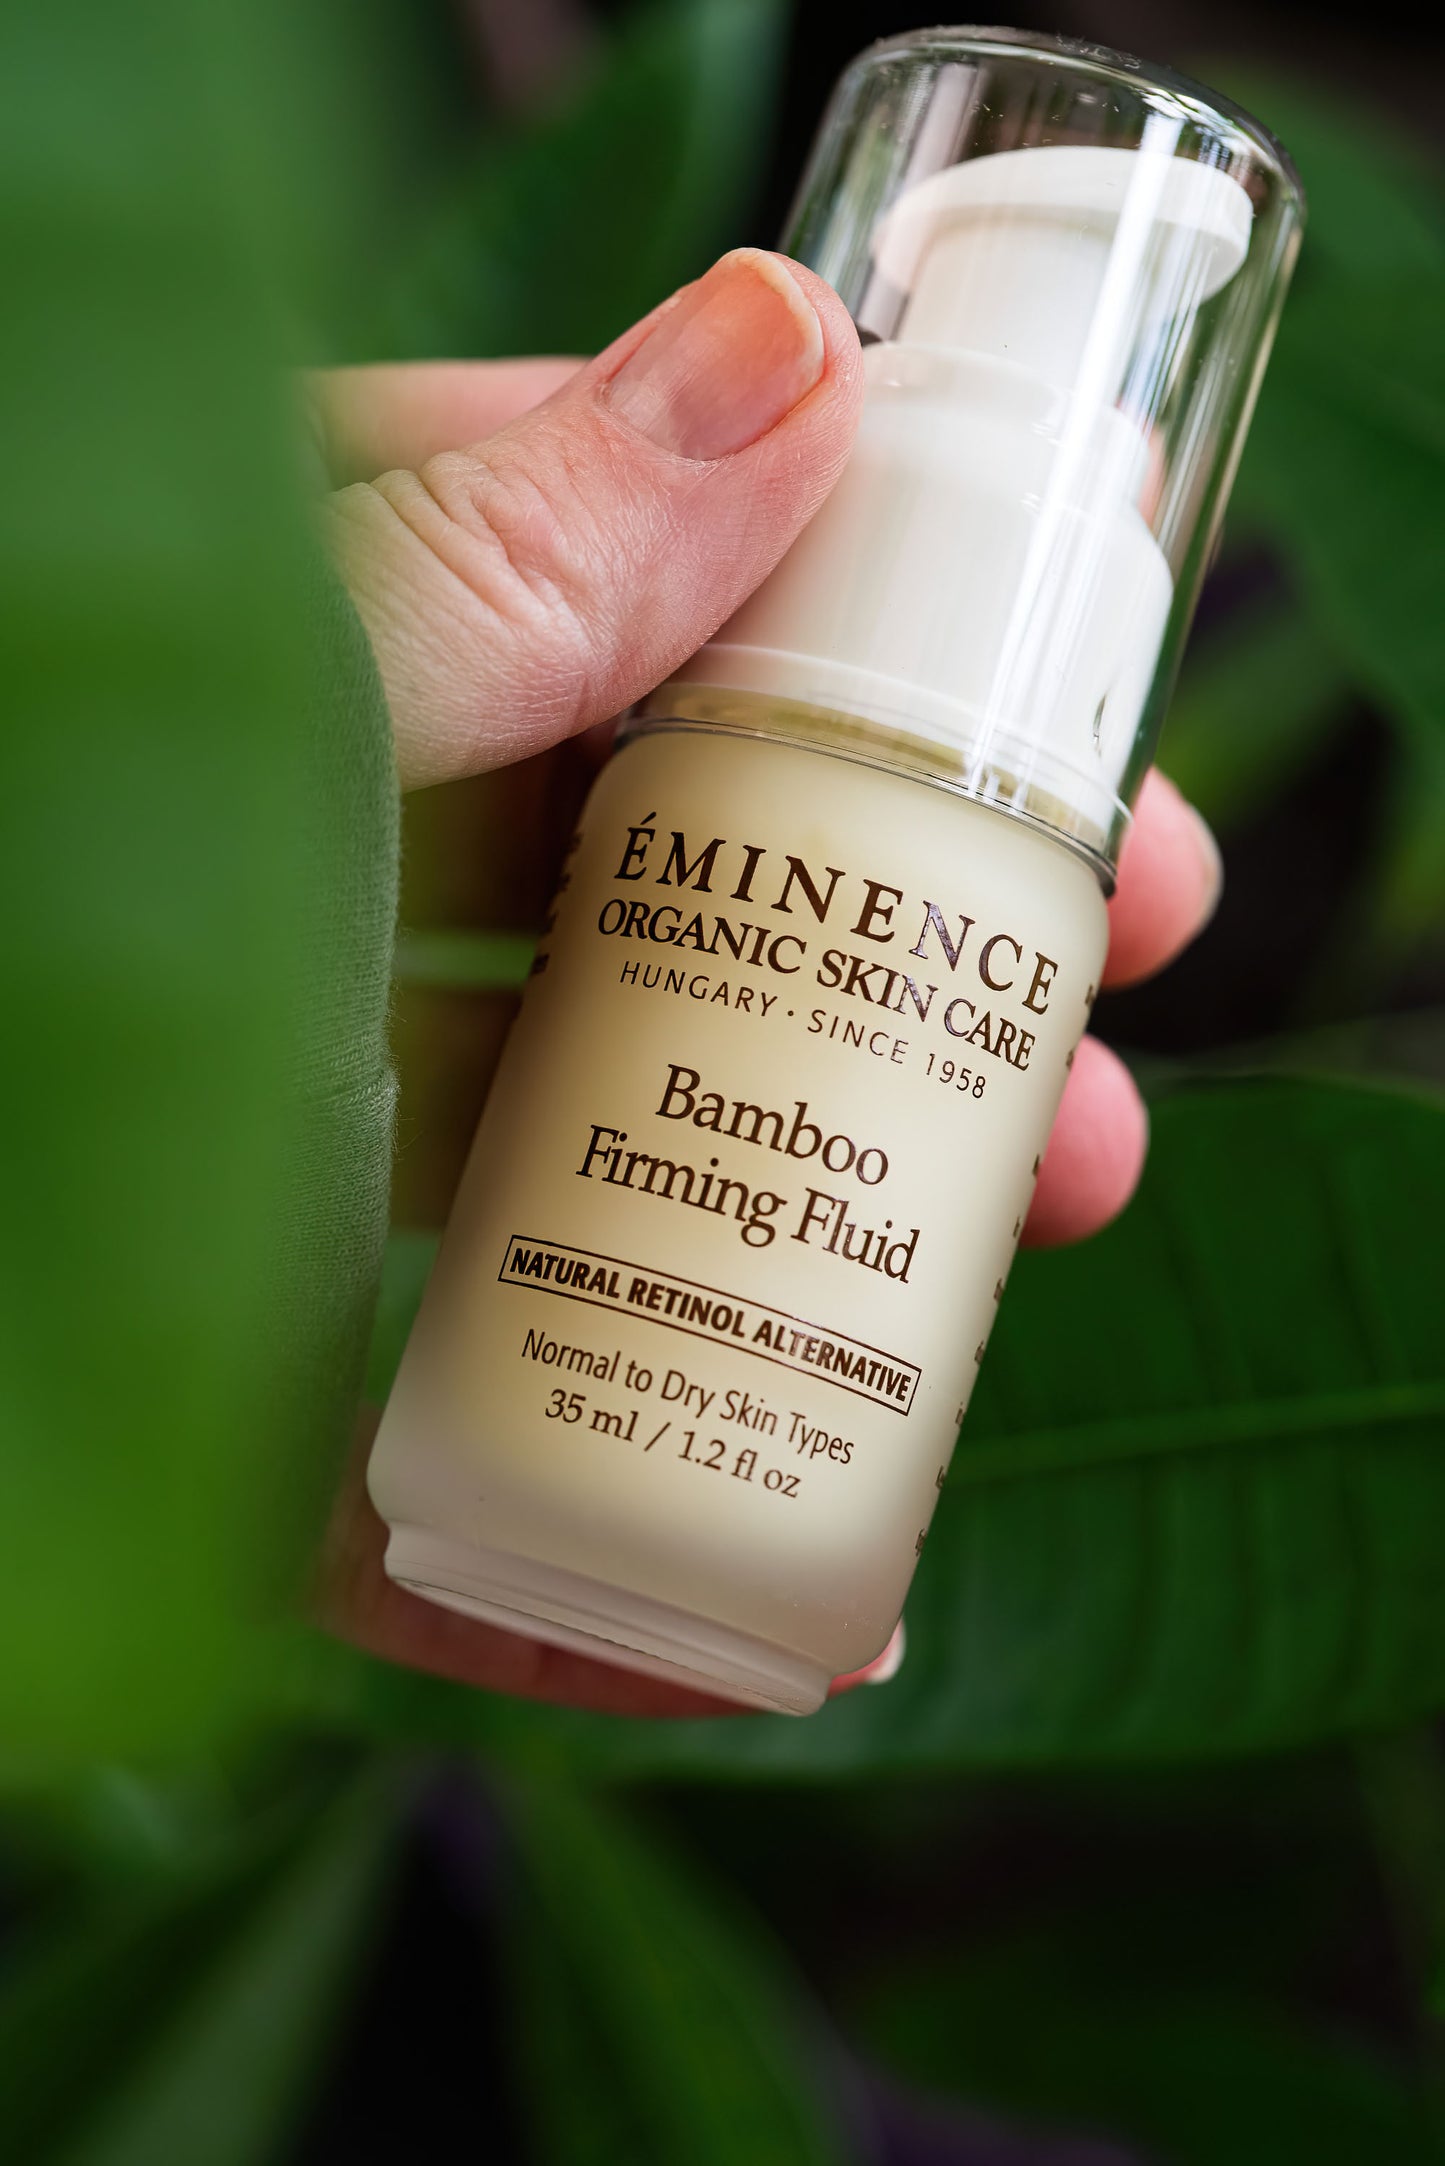 Eminence Organic Skin Care Bamboo Firming Fluid